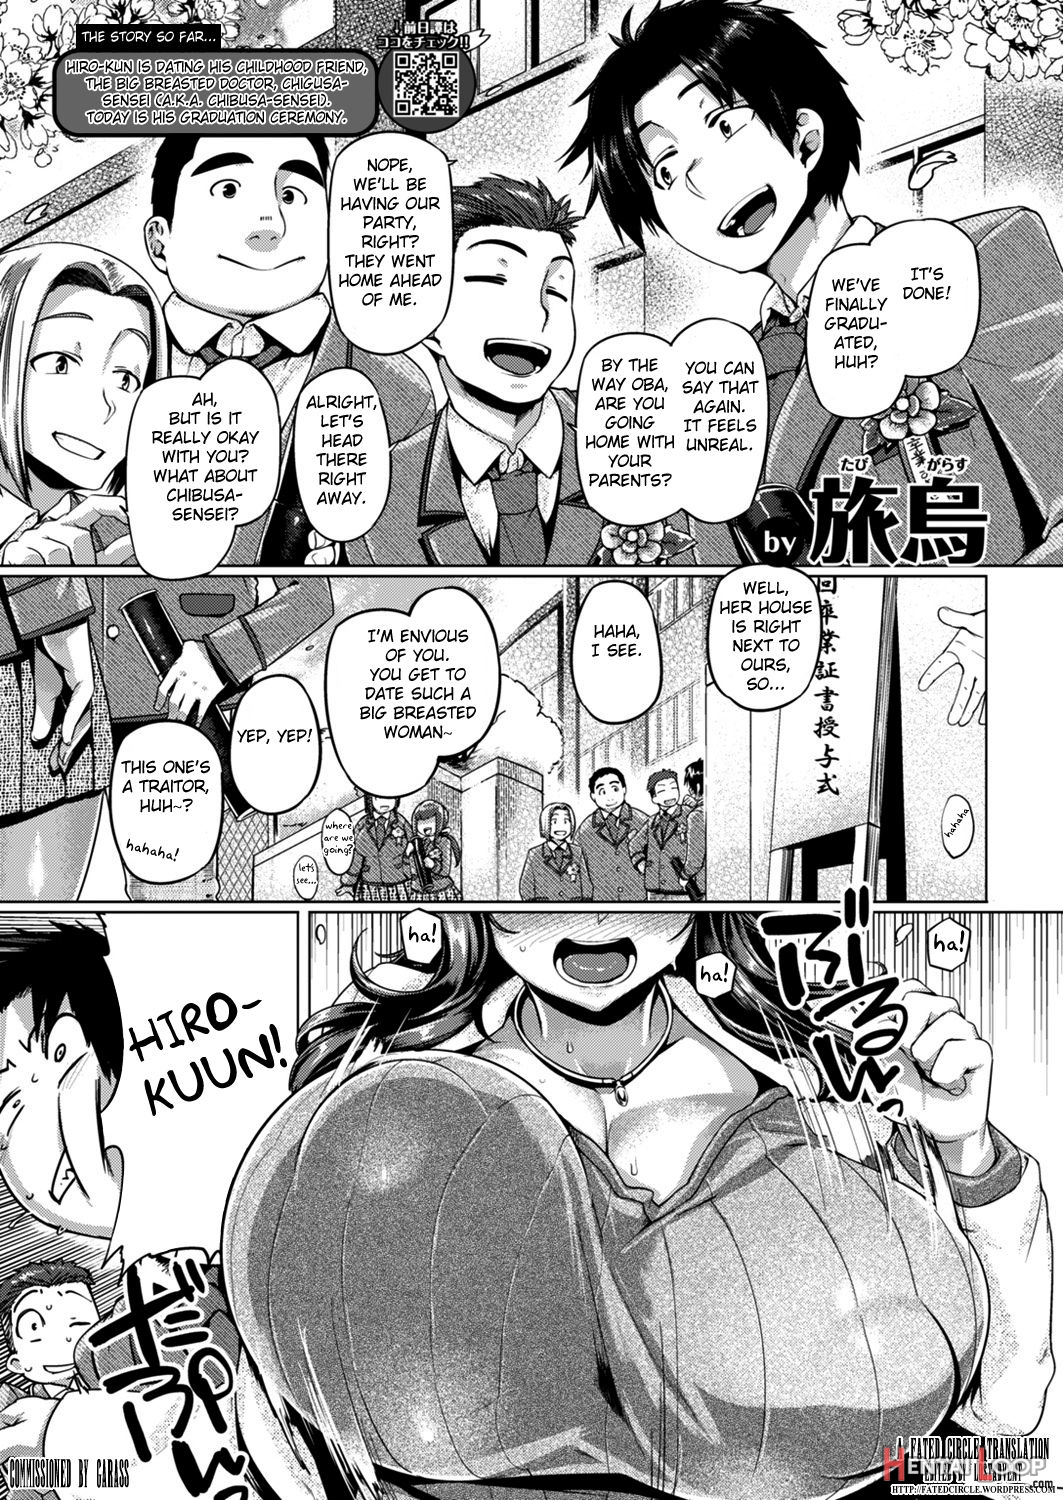 Chibusa-sensei Celebration page 1